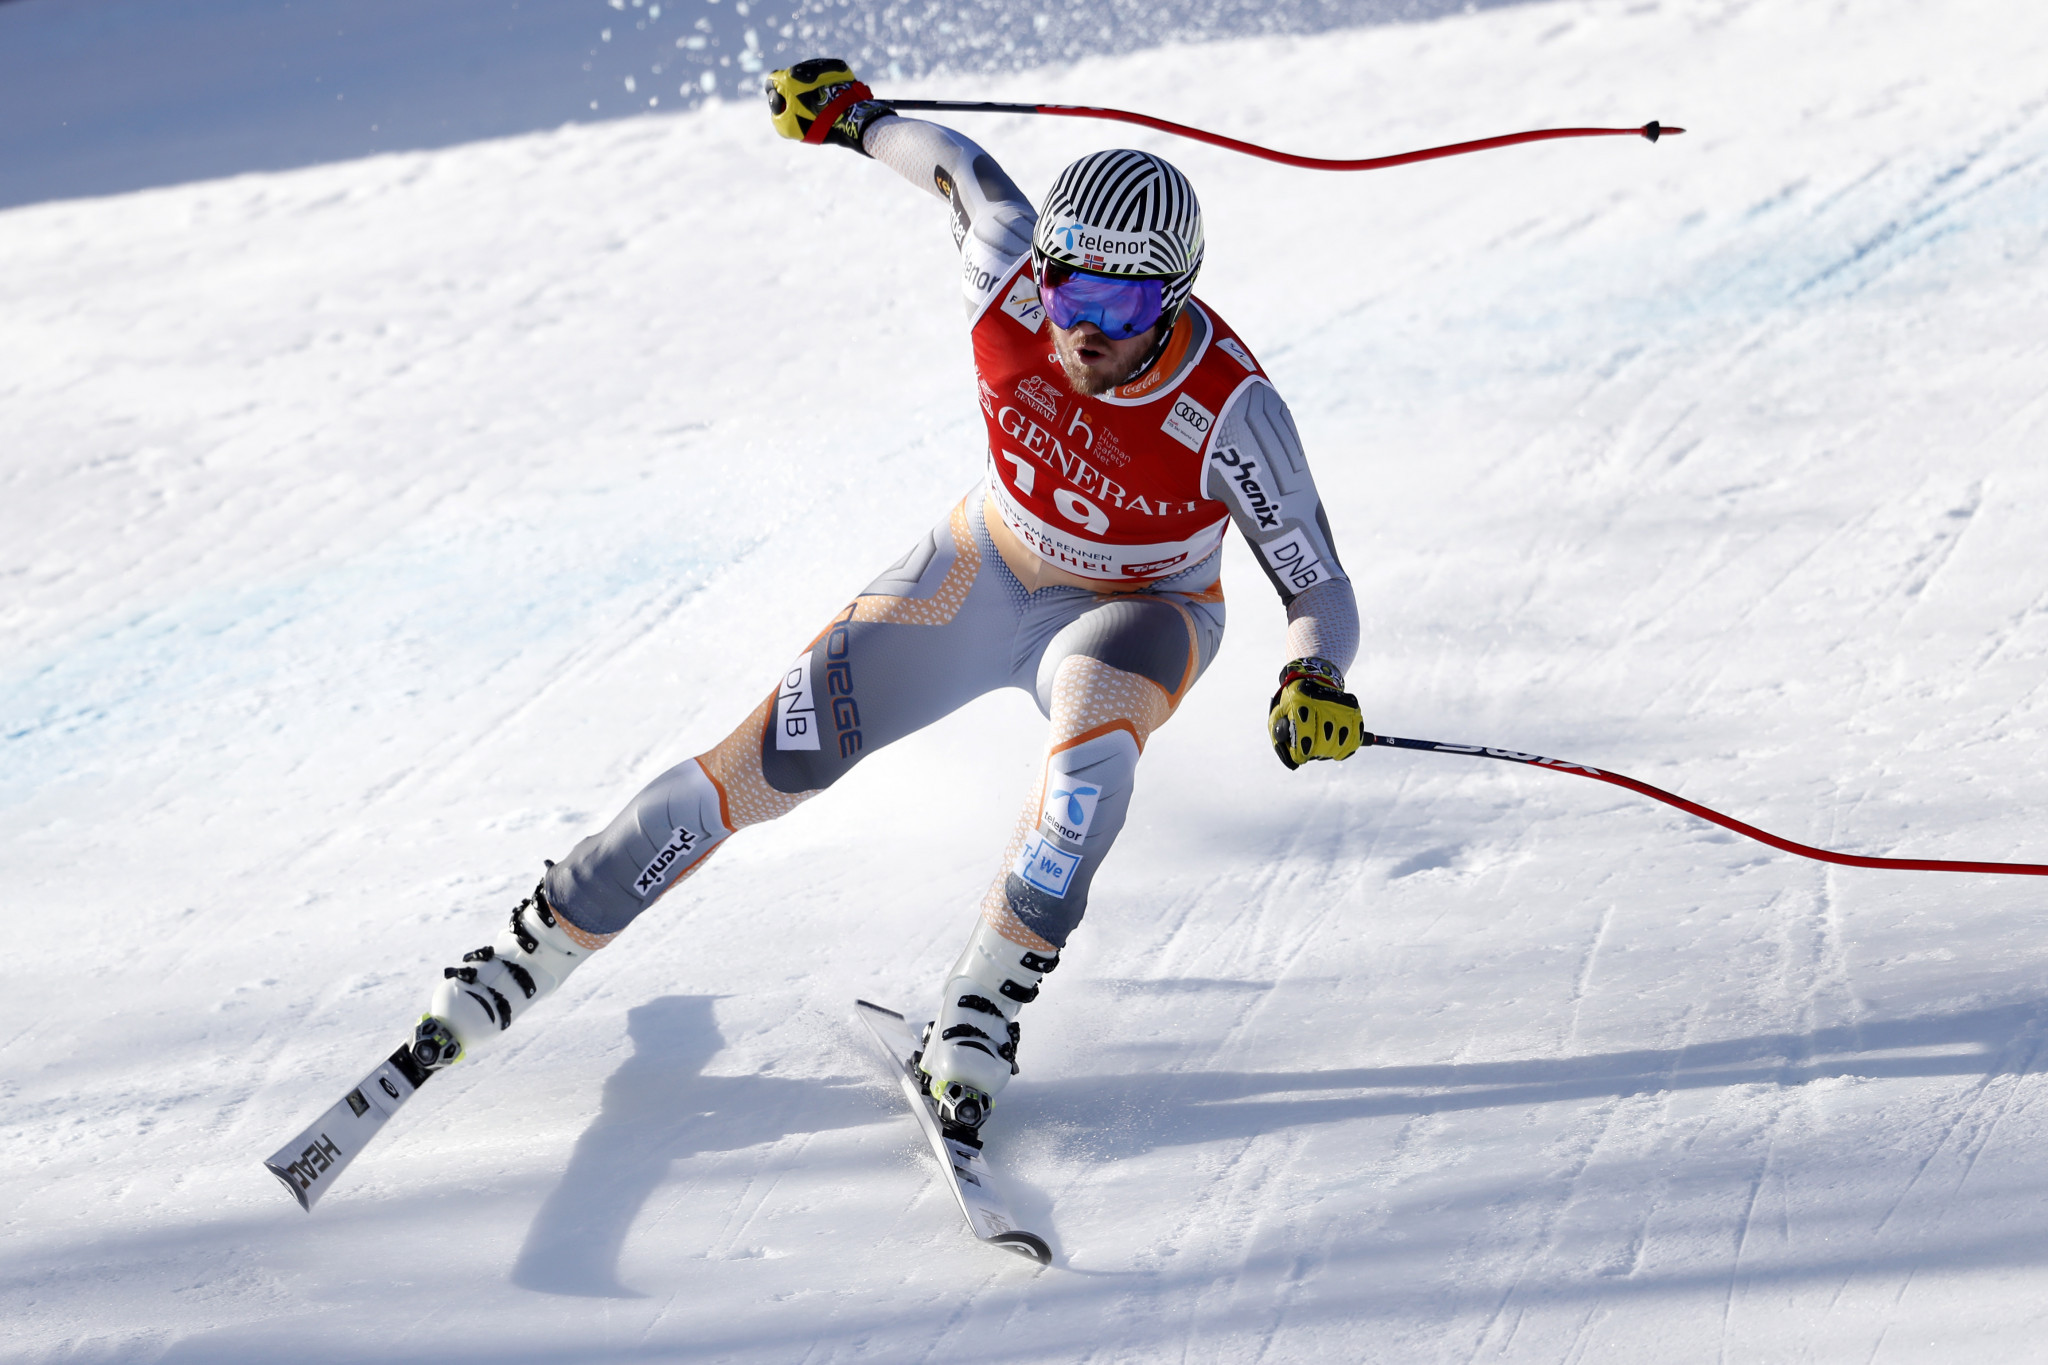 Norway's Jansrud back on top in men's super-G, as FIS World Cup starts in Kitzbühel